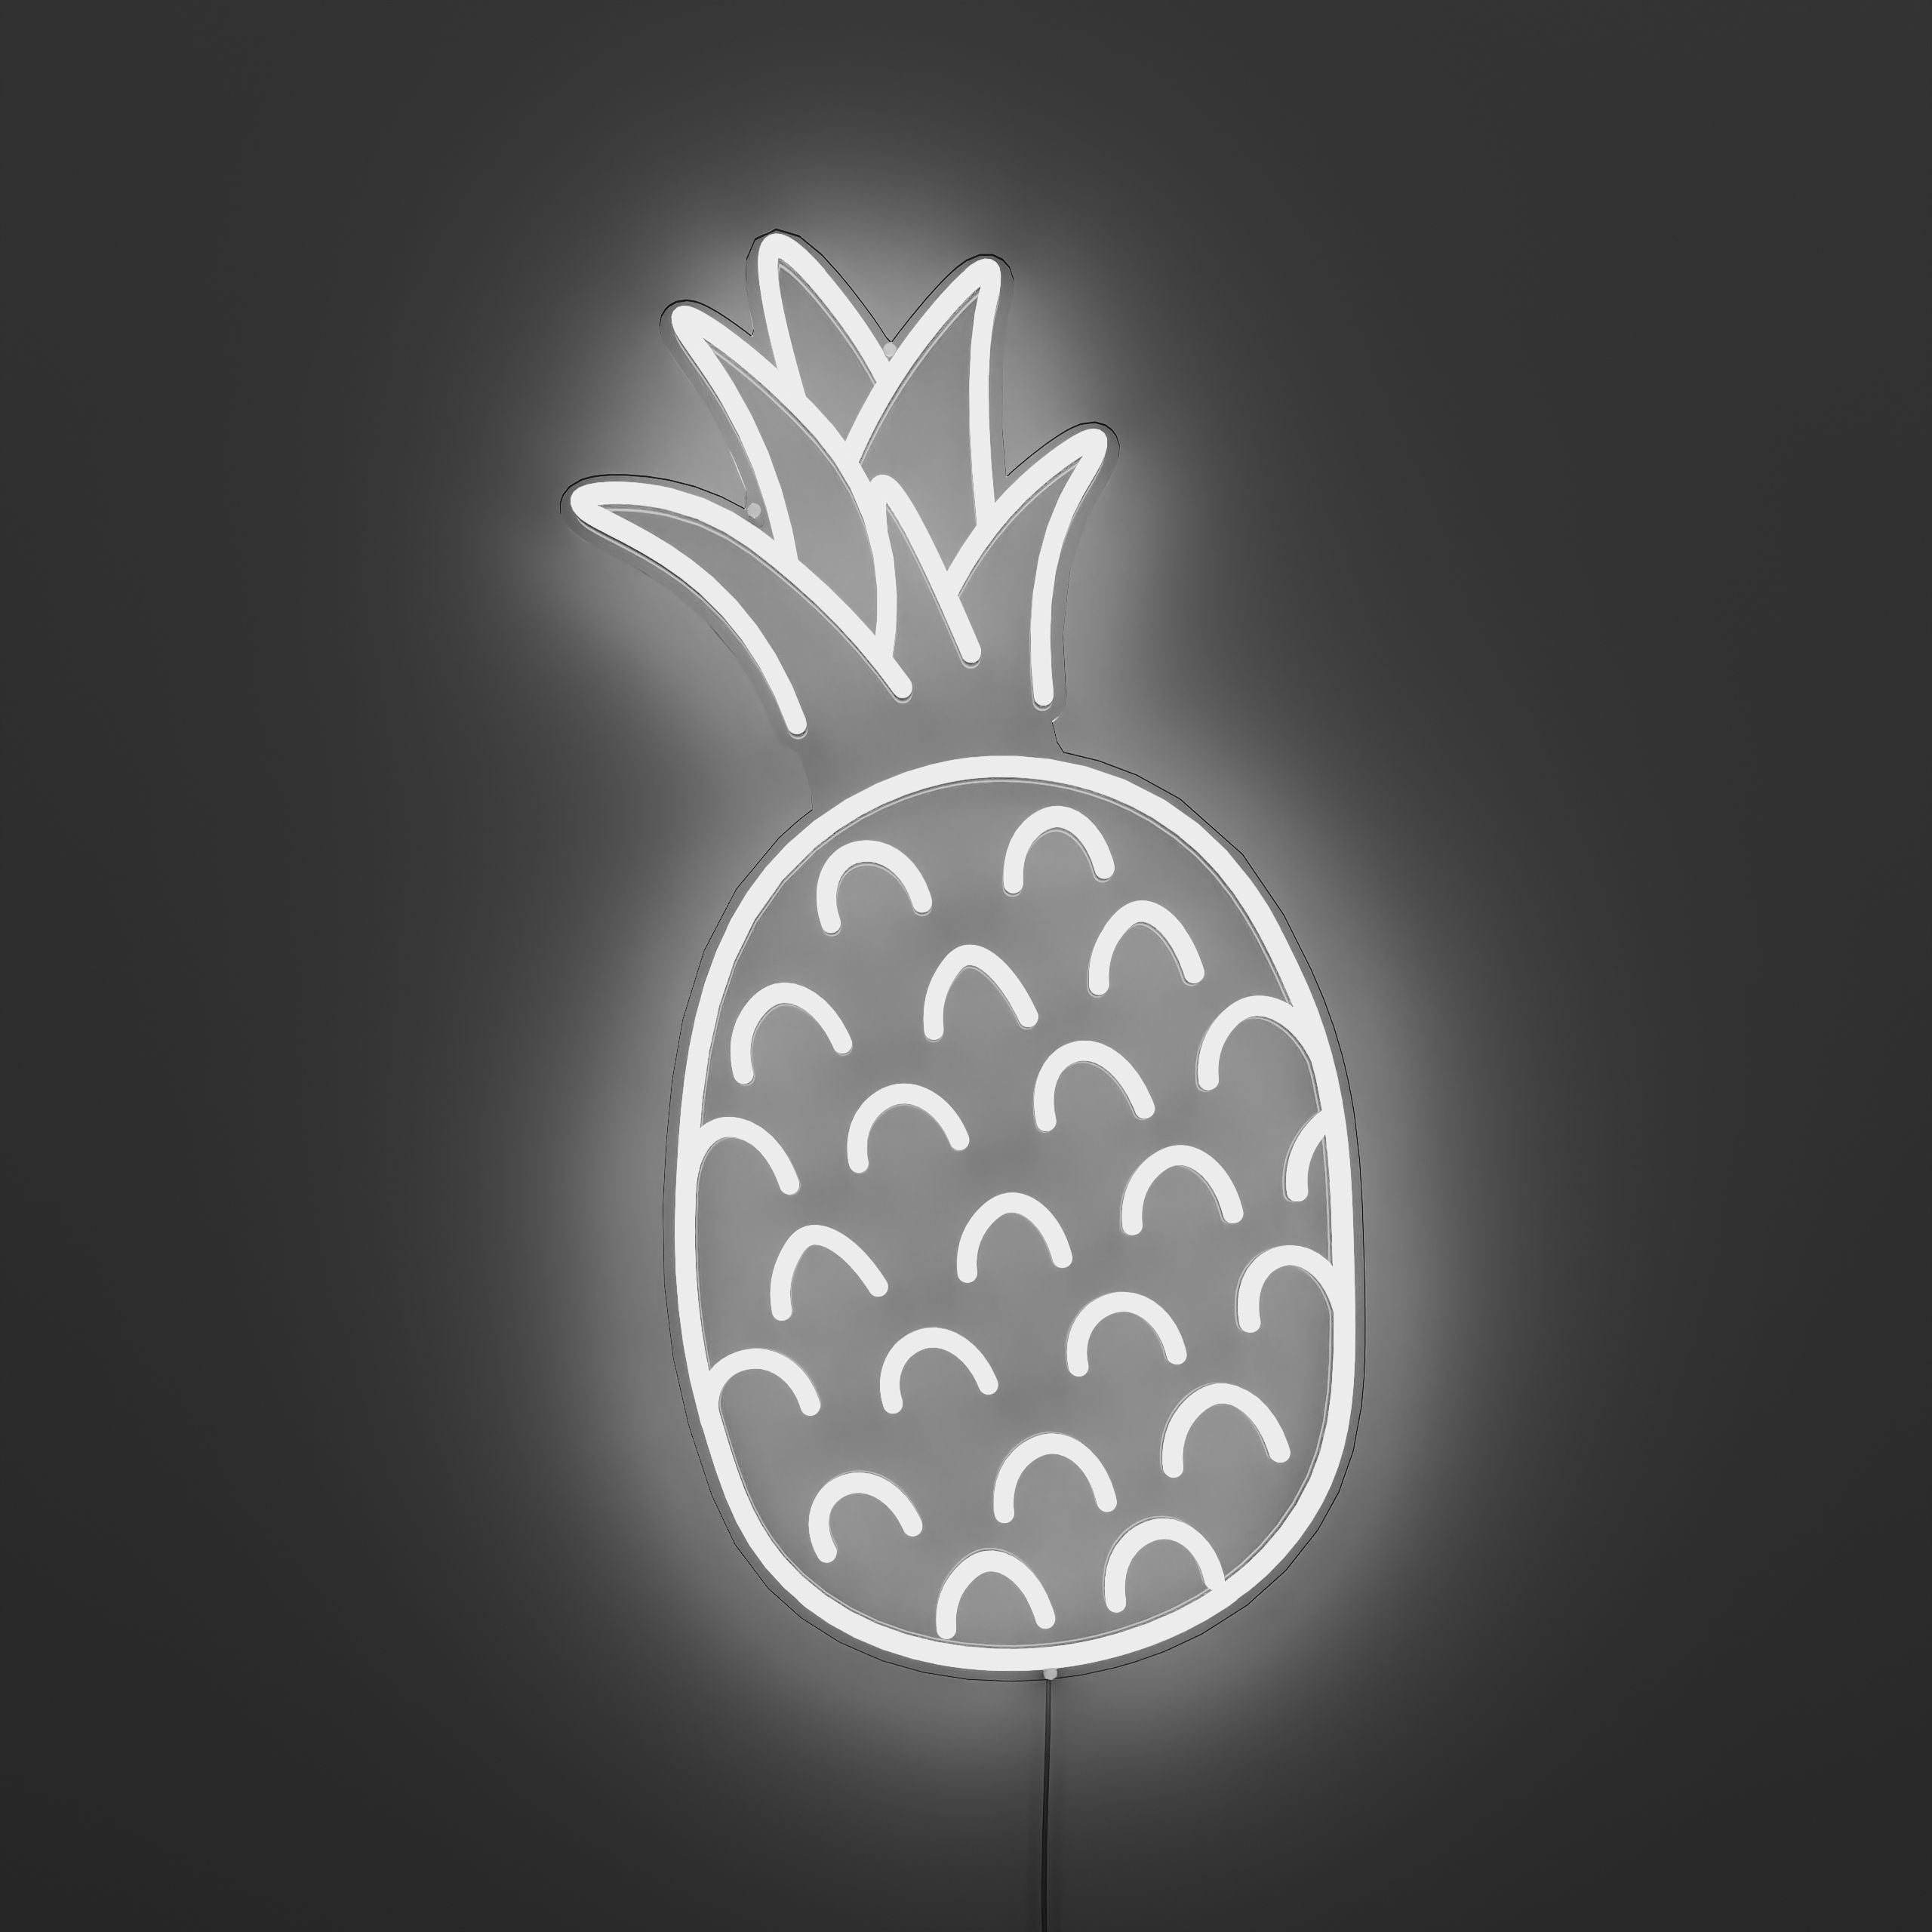 pineapple-night-lights-neon-sign-lite